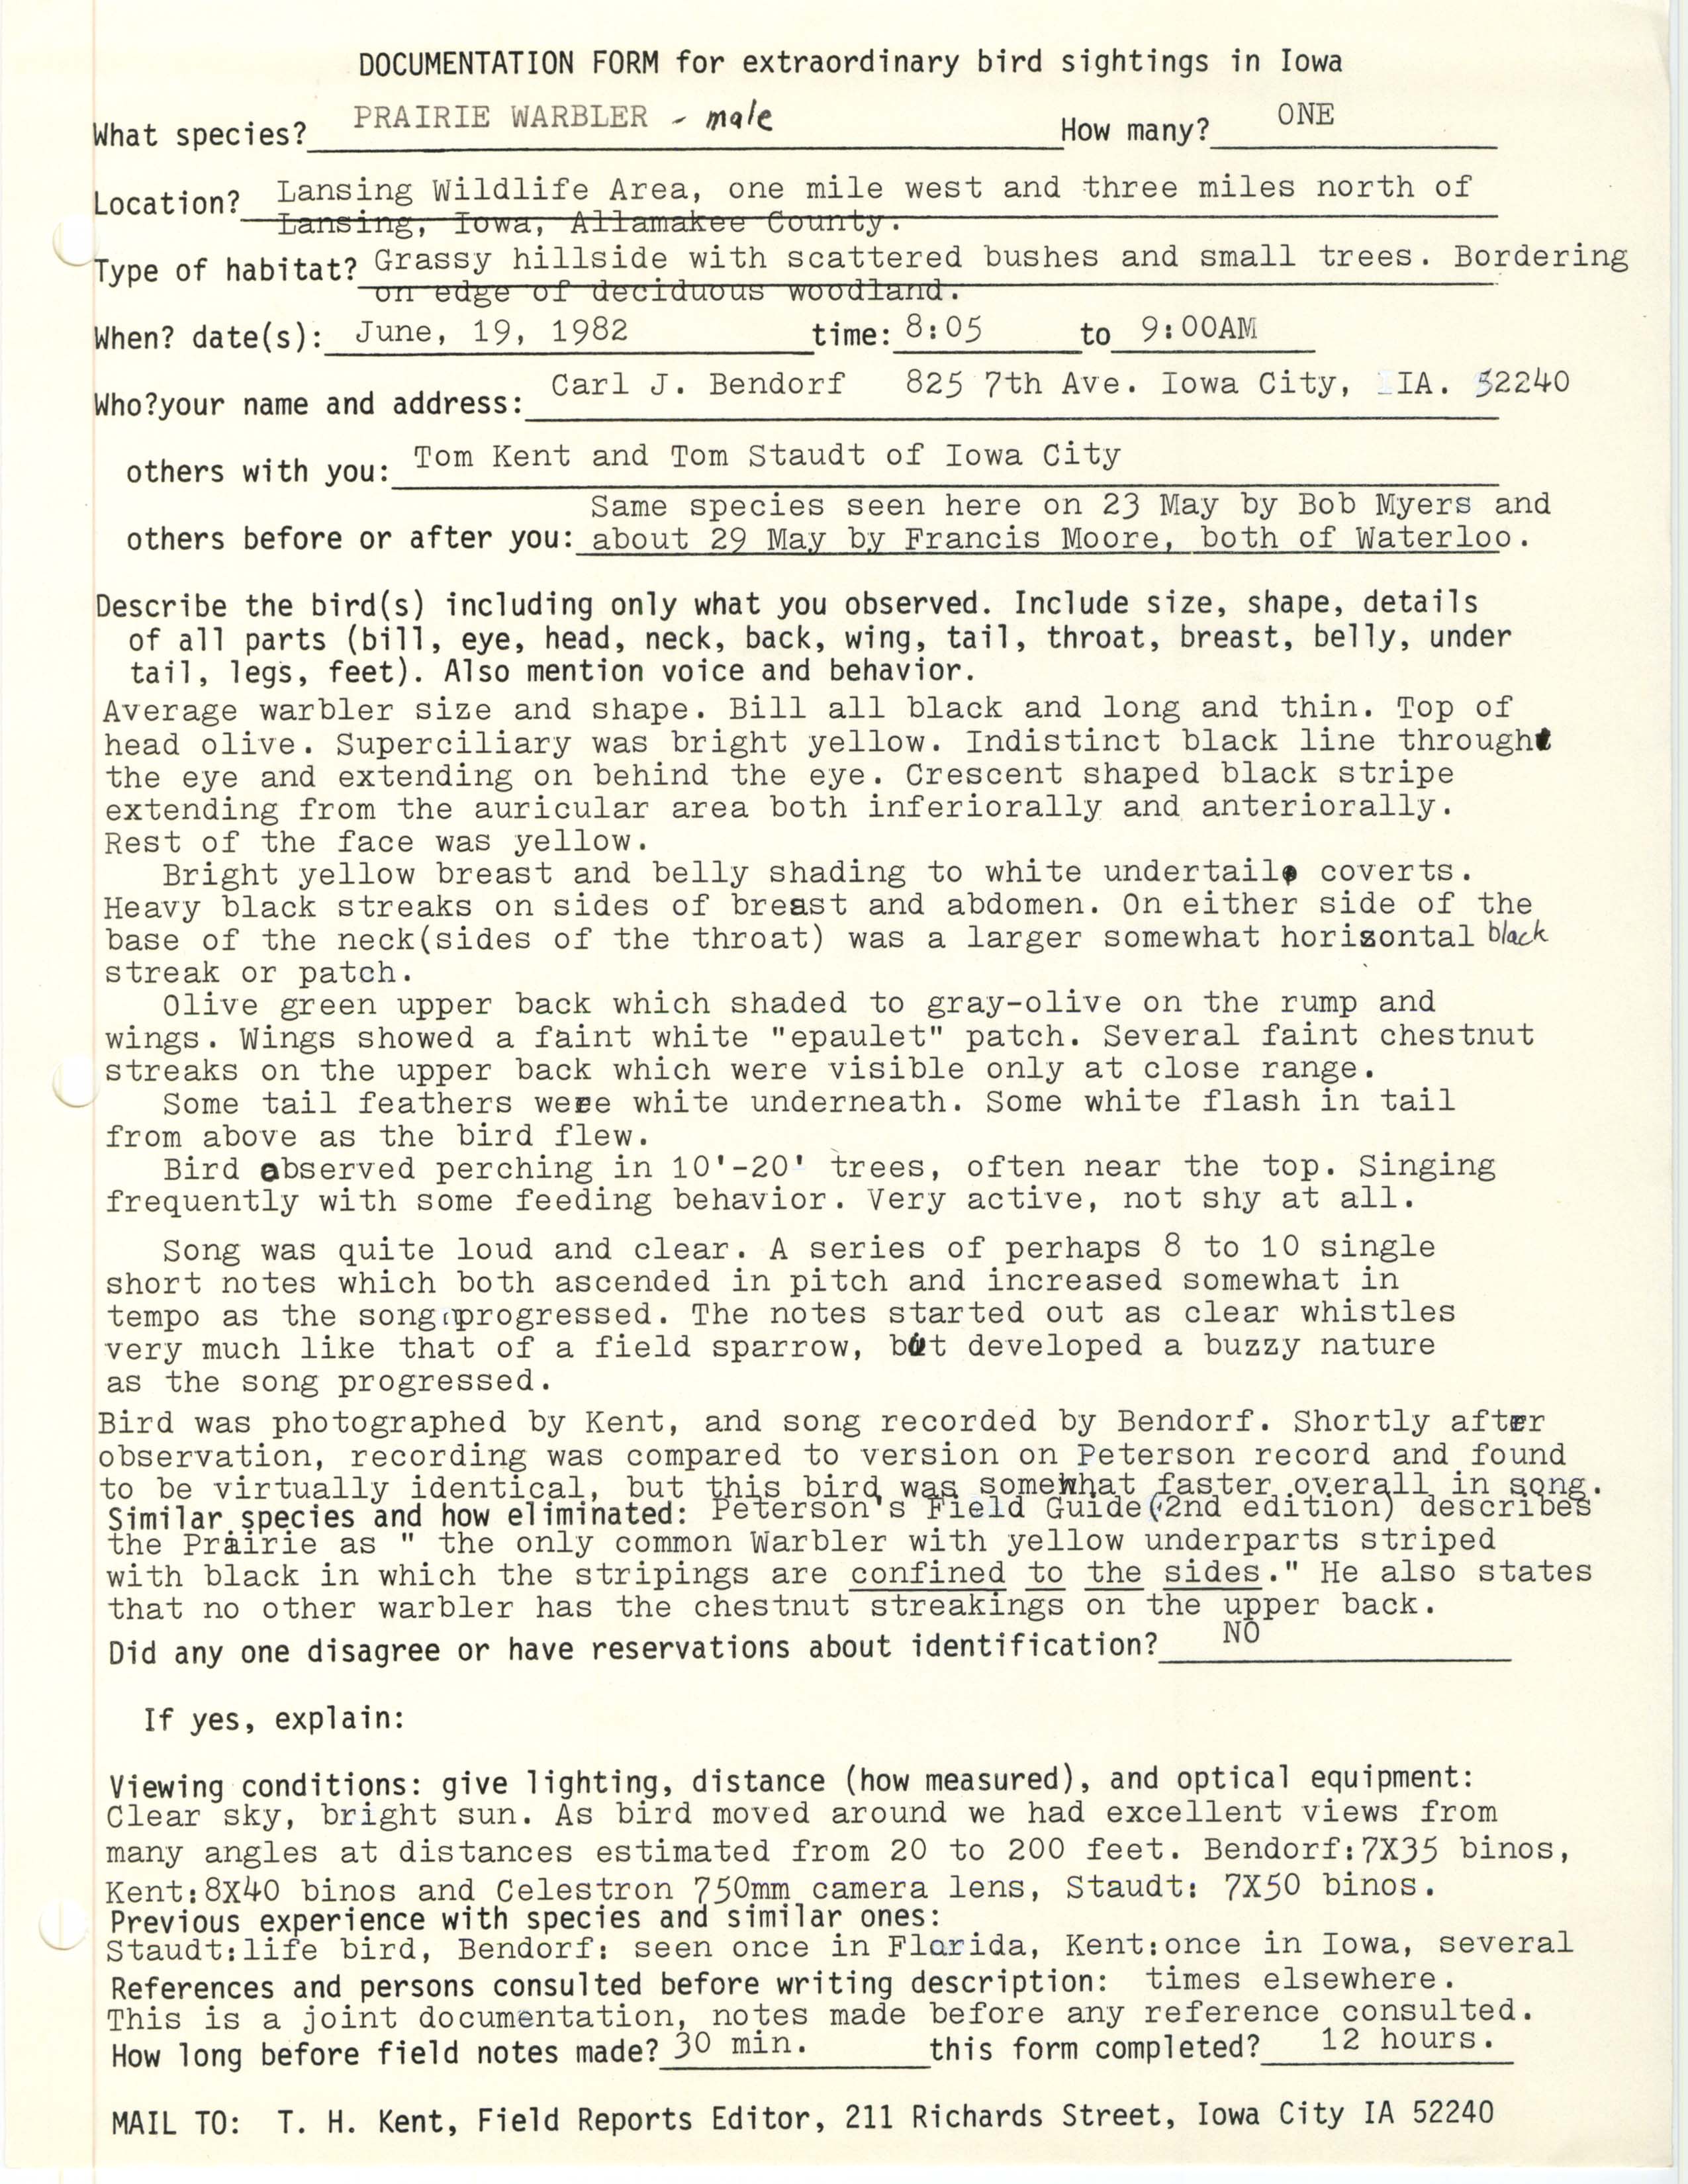 Rare bird documentation form for Prairie Warbler at Lansing Wildlife Area, 1982